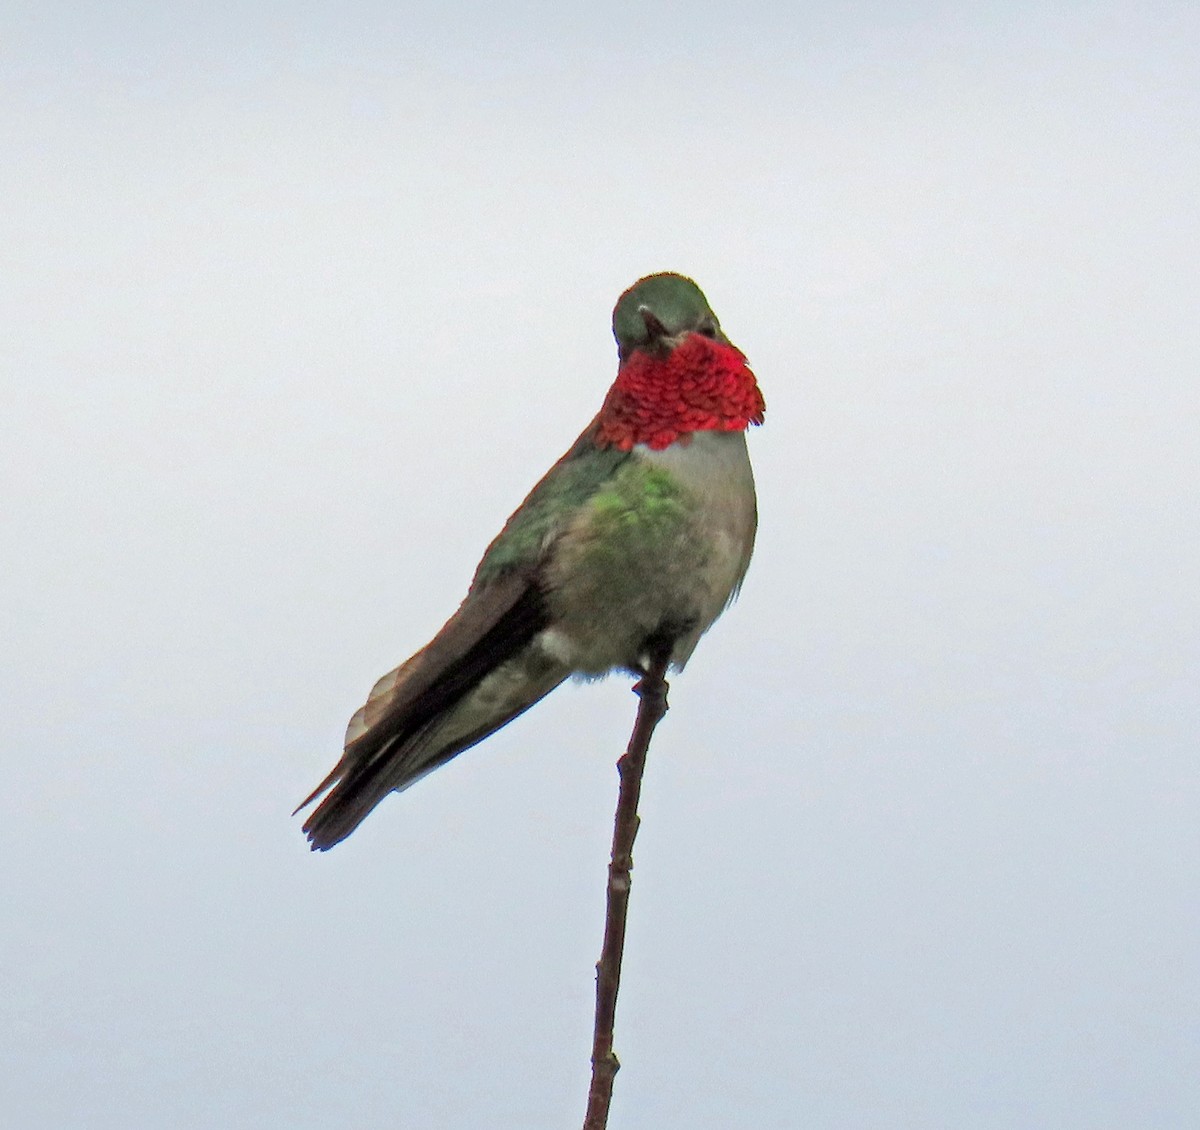 Broad-tailed Hummingbird - JoAnn Potter Riggle 🦤